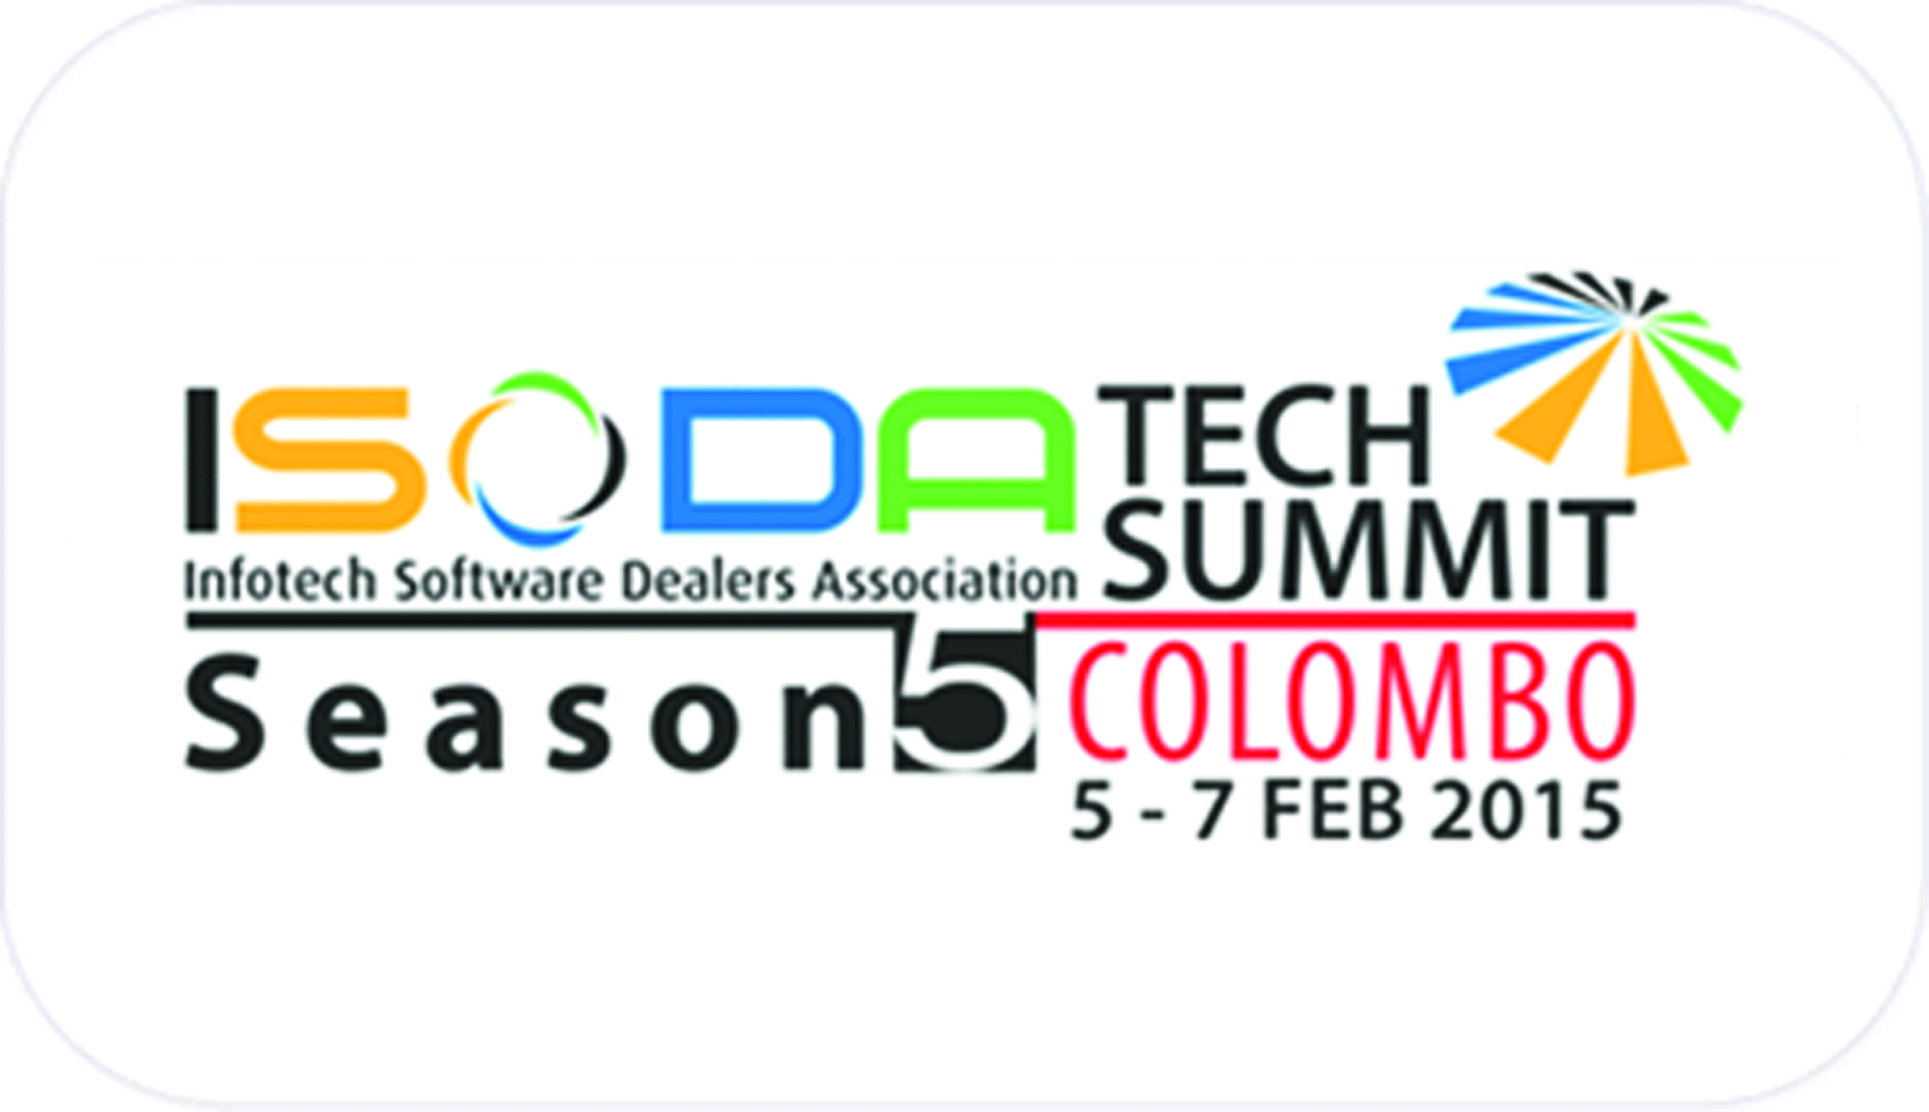 ISODA Tech Summit Season 5 to take place in Sri Lanka